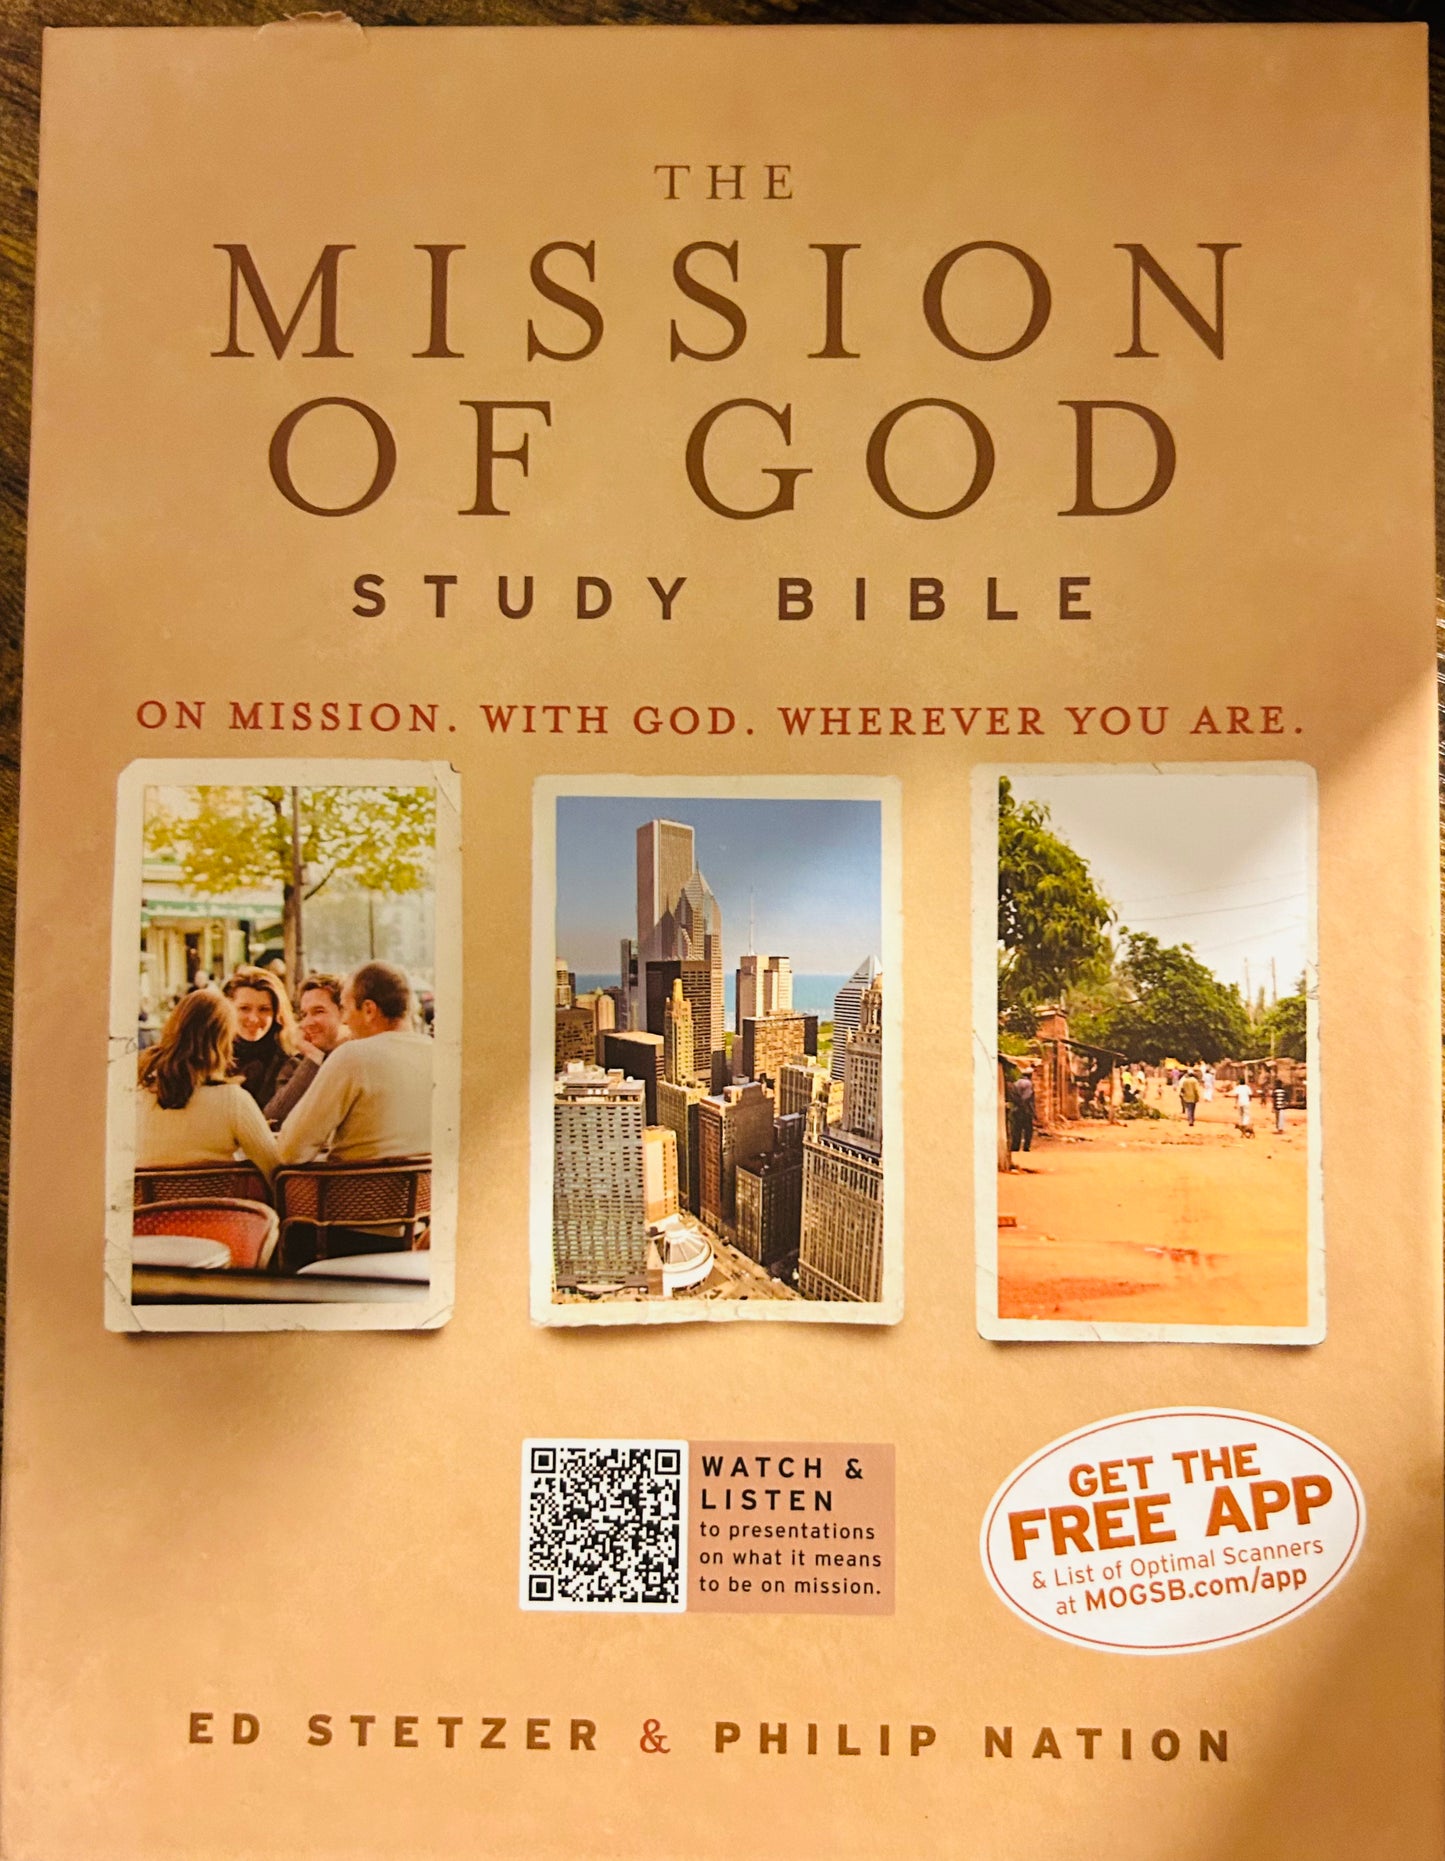 MISSION OF GOD STUDY BIBLE